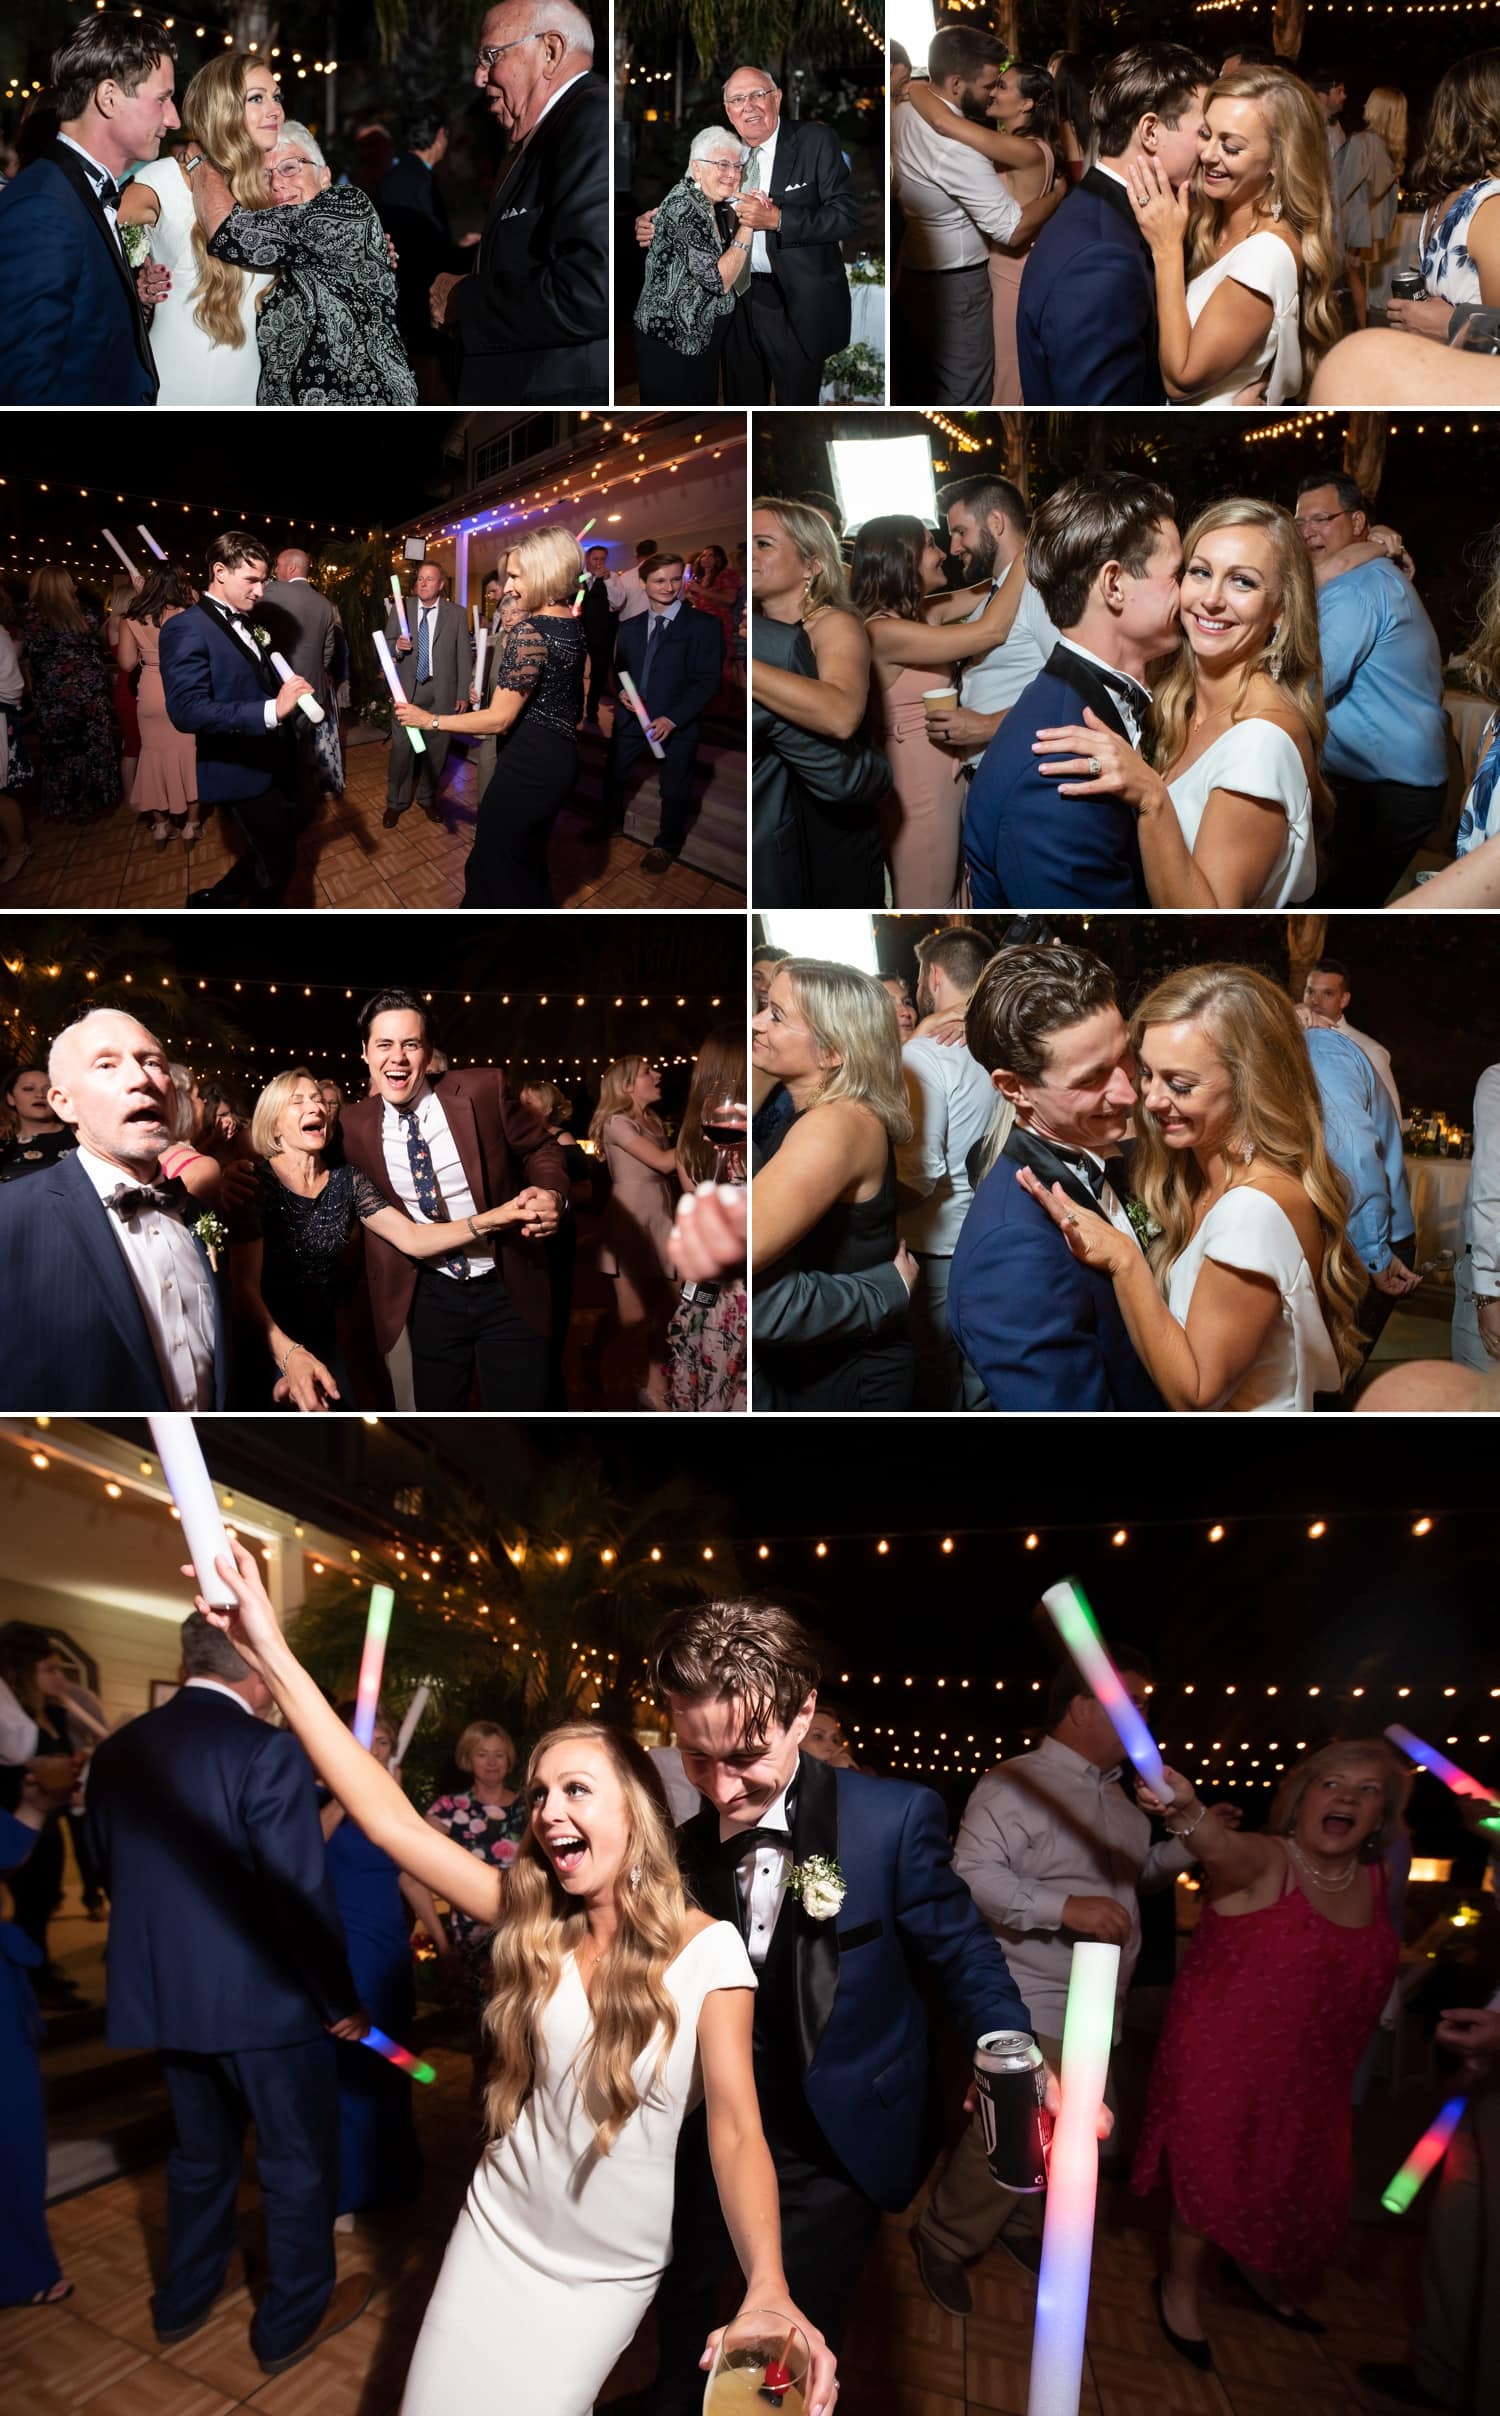 People dancing at the wedding reception at Chapin Family Vineyards. 